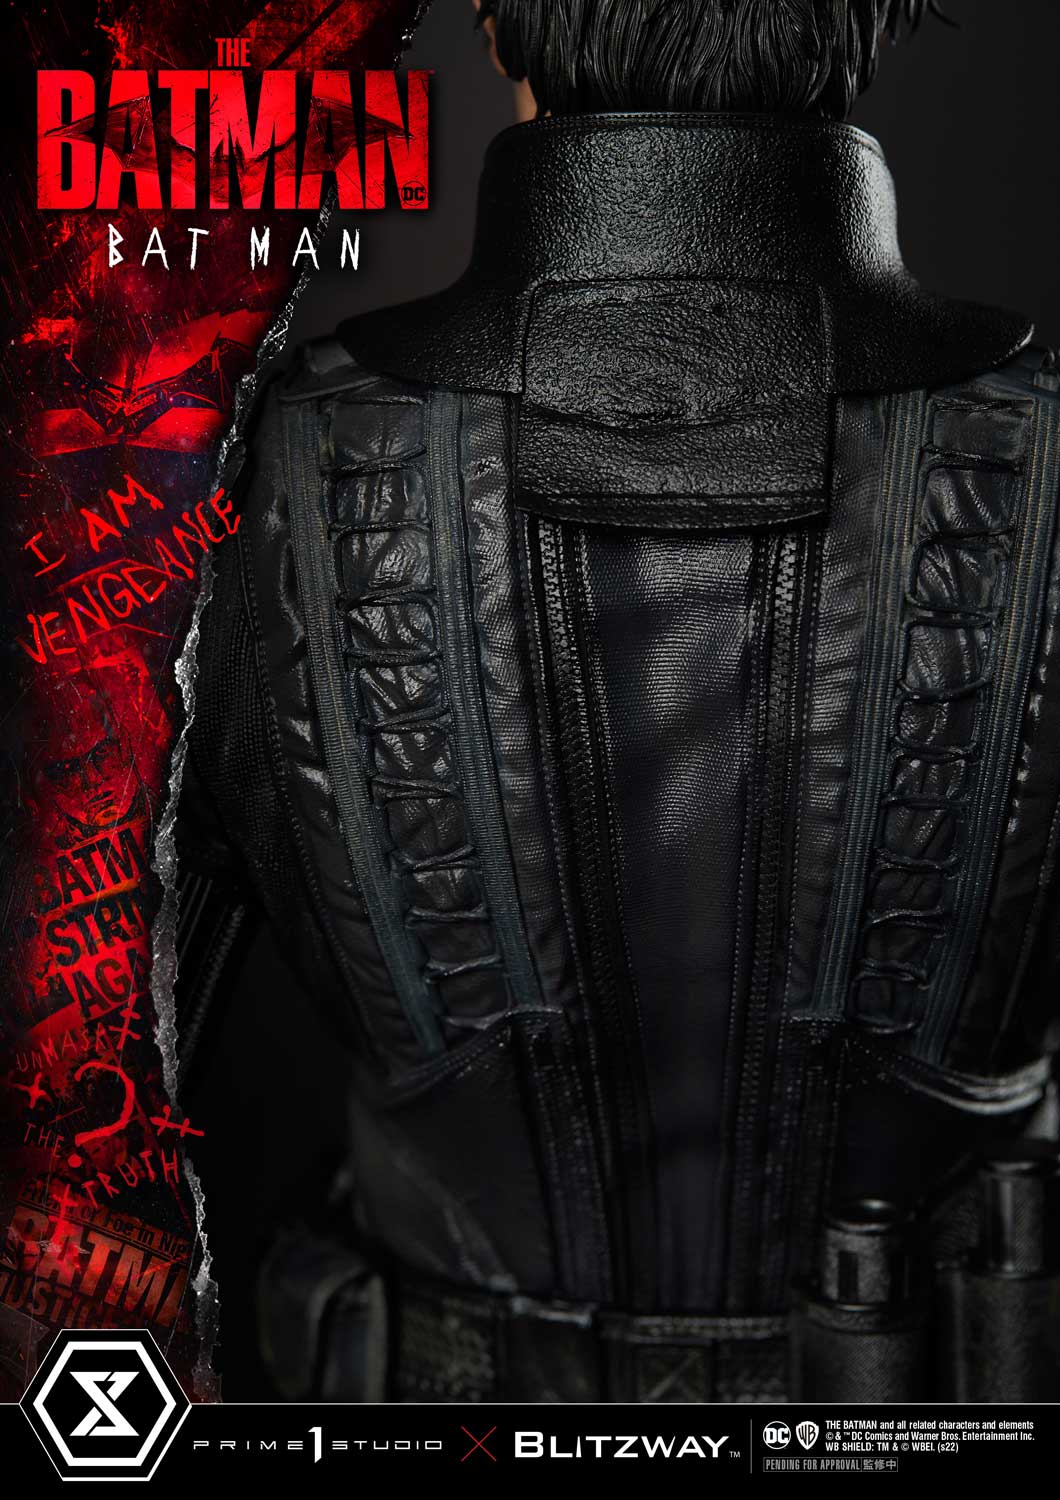 THE BATMAN -ザ・バットマン-「バットマン ボーナス版」のフィギュア画像